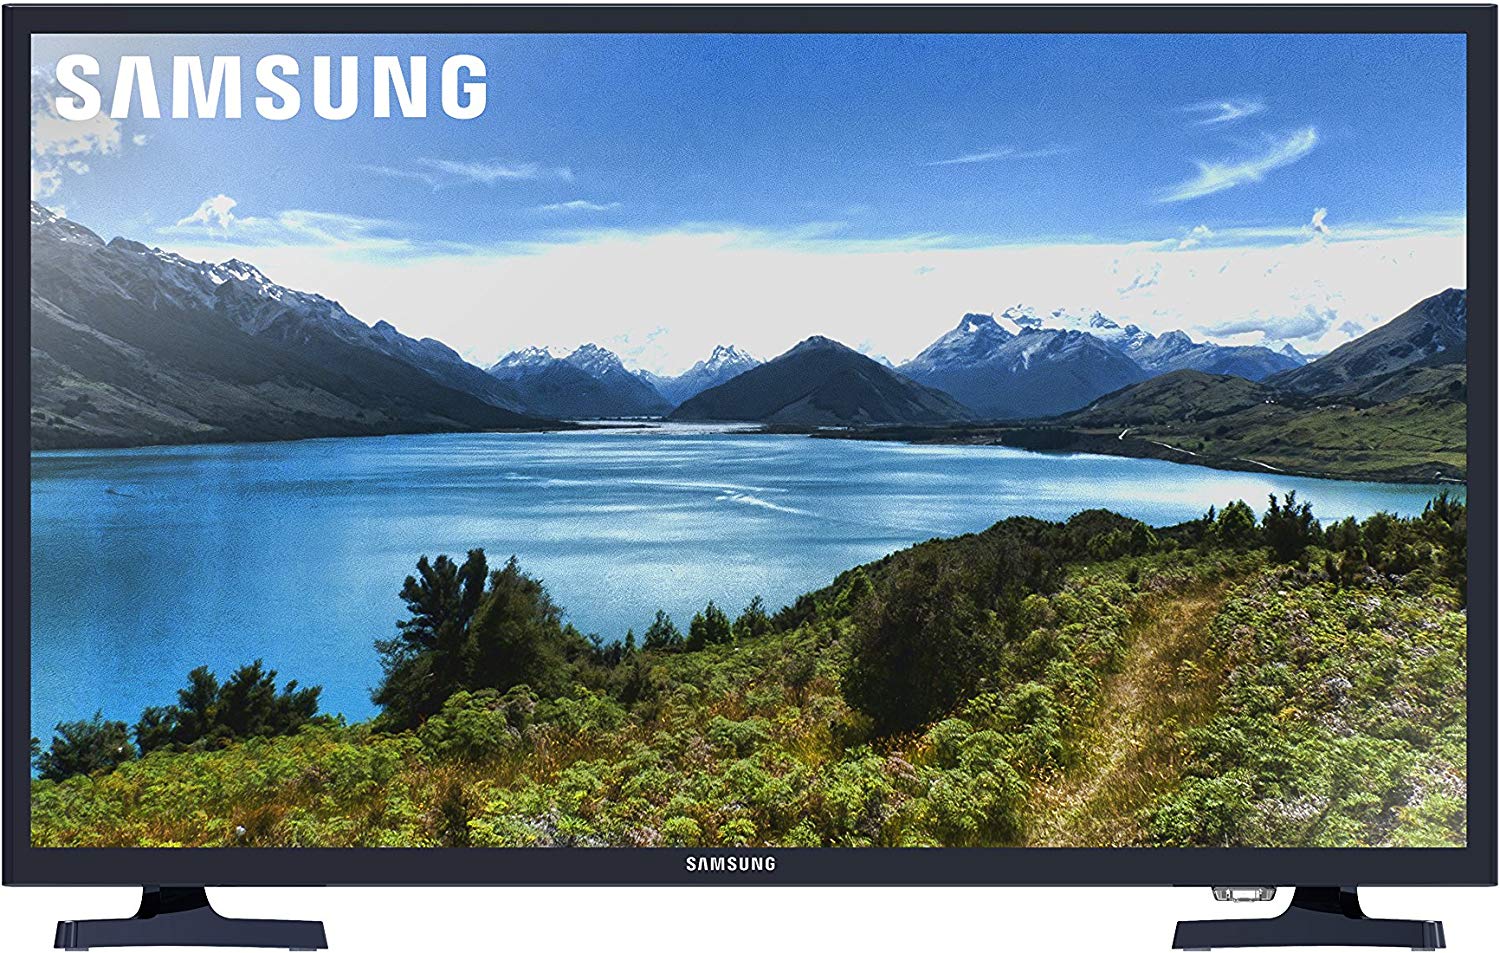 Samsung UN32J4001 - 32 inch Smart TV